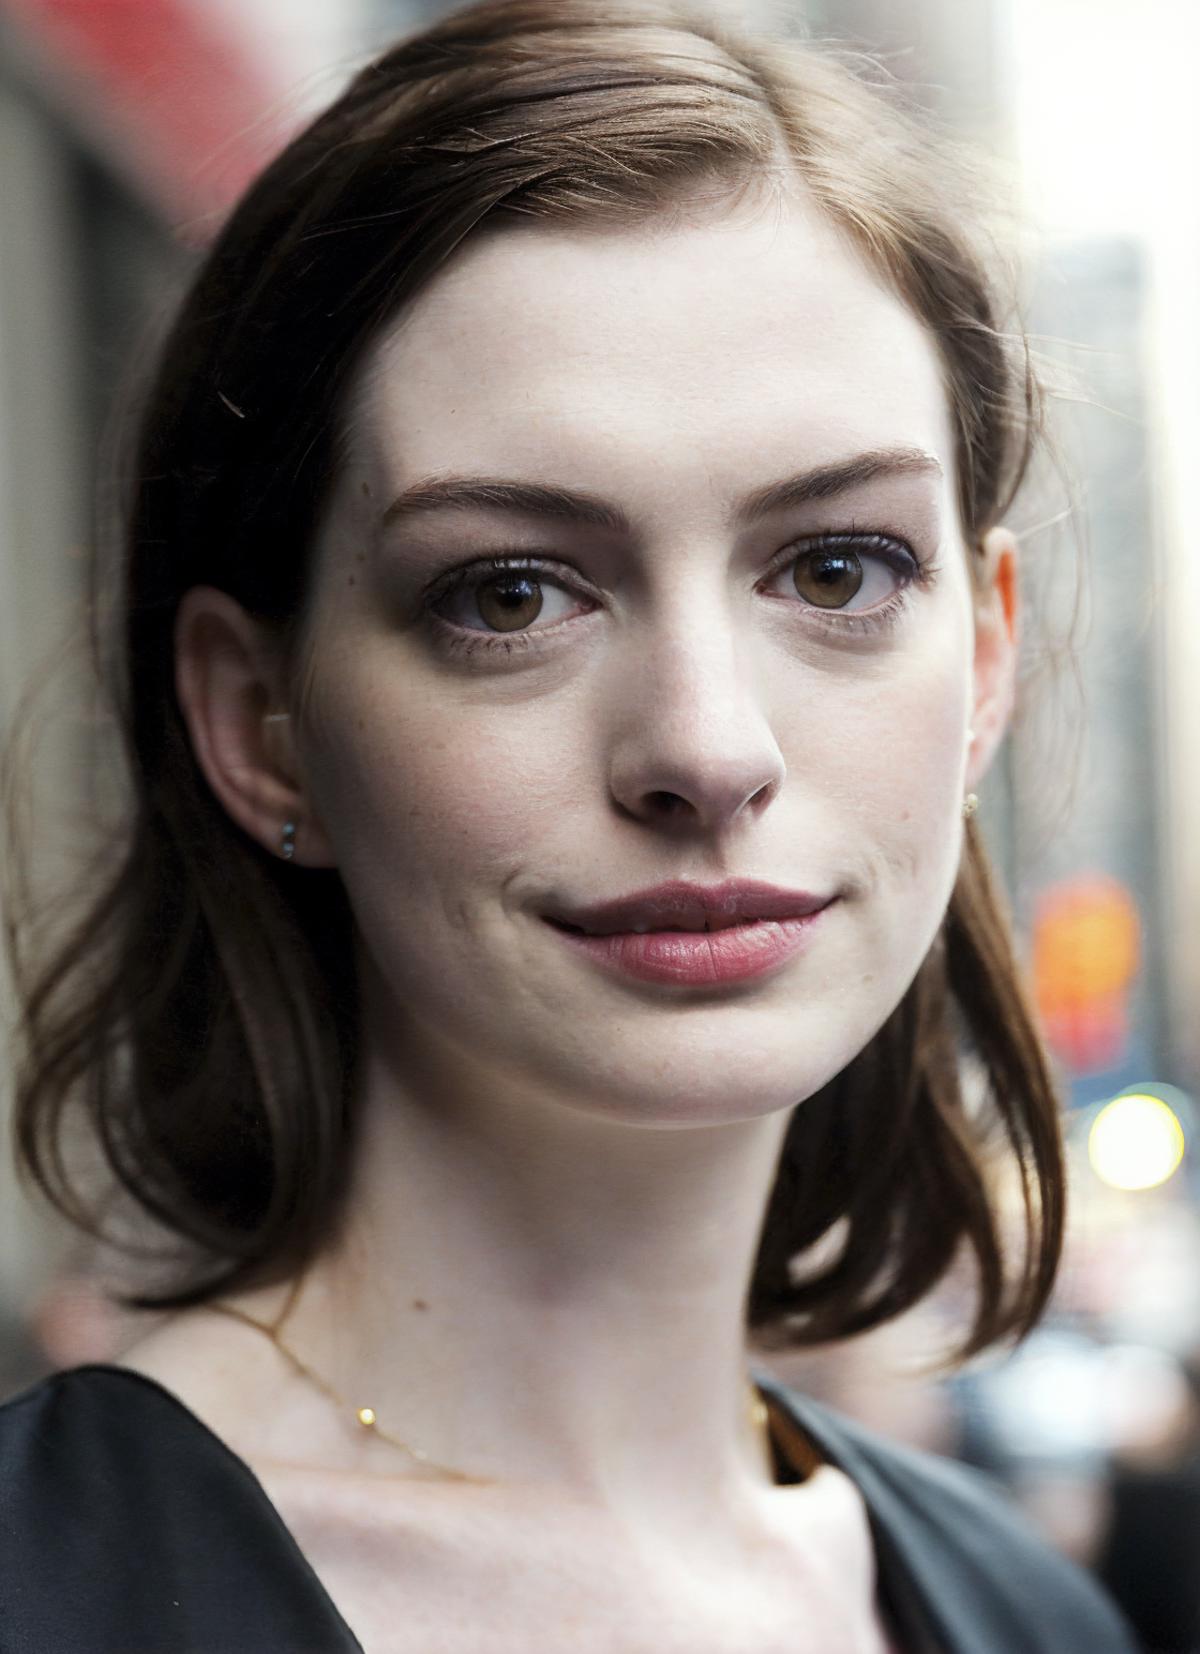 Anne Hathaway image by malcolmrey